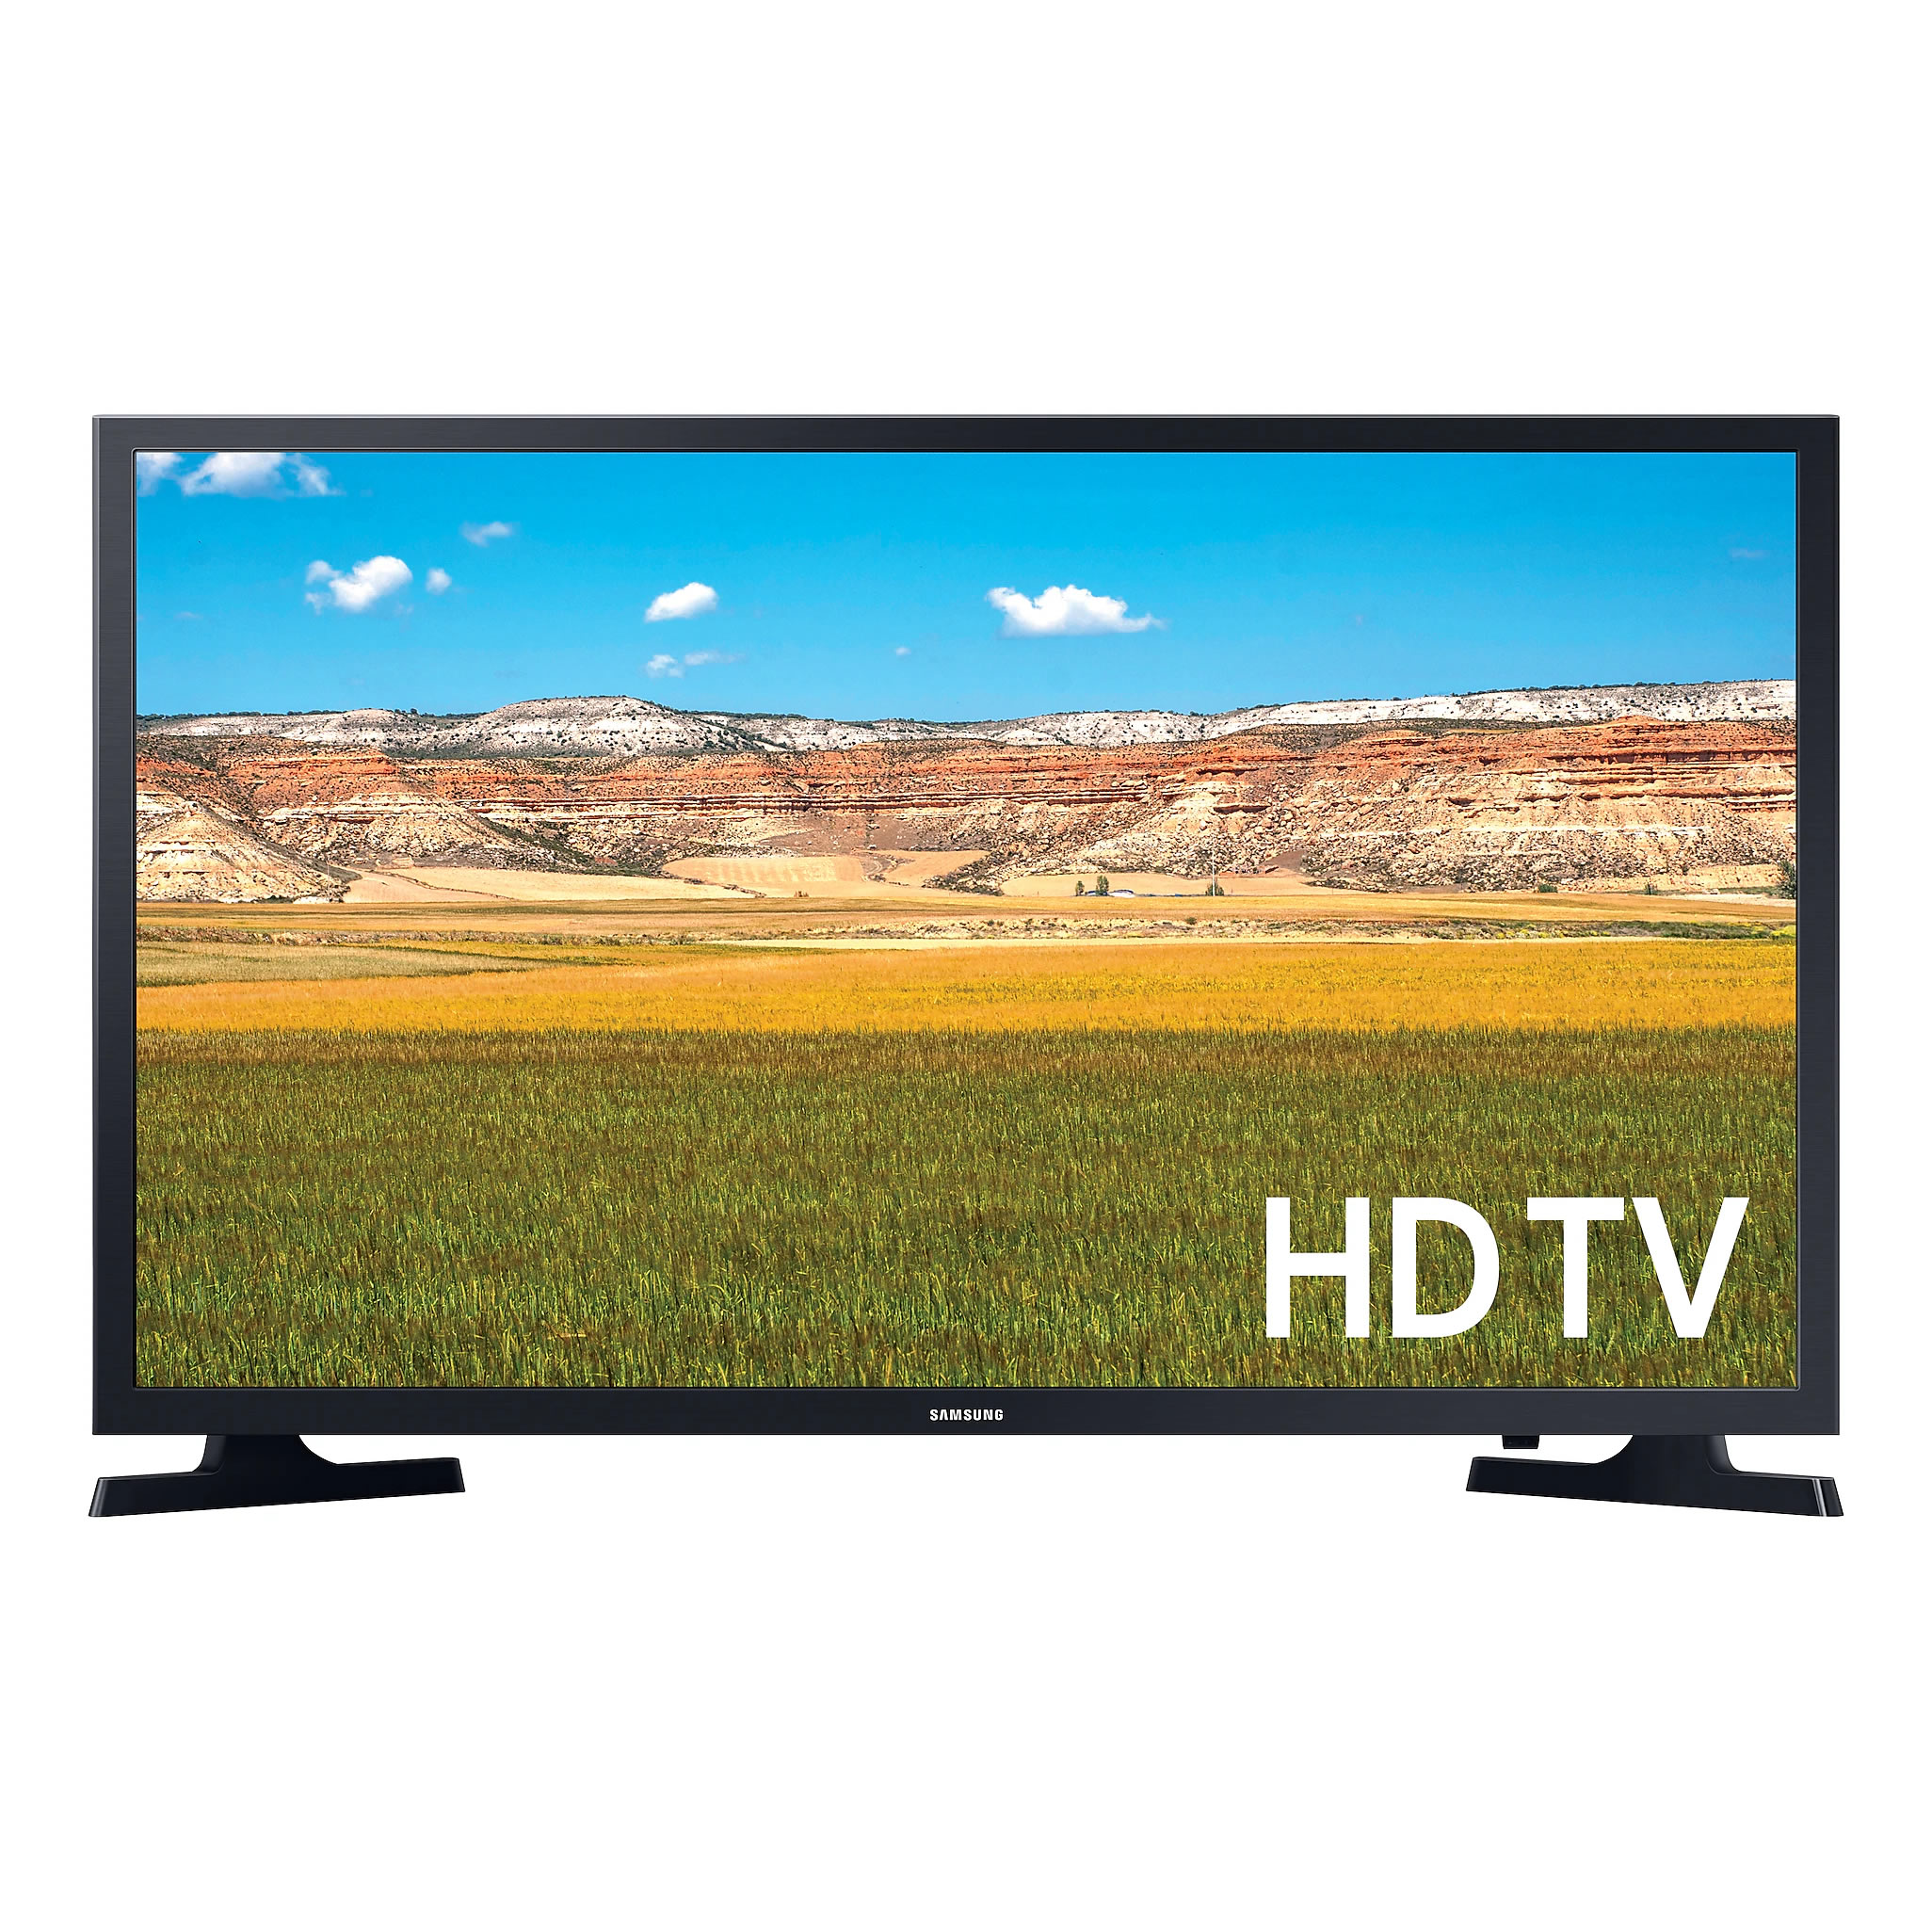 Image of 32" SAMSUNG UE32T4300AEXXU Smart HD Ready HDR LED TV, Black